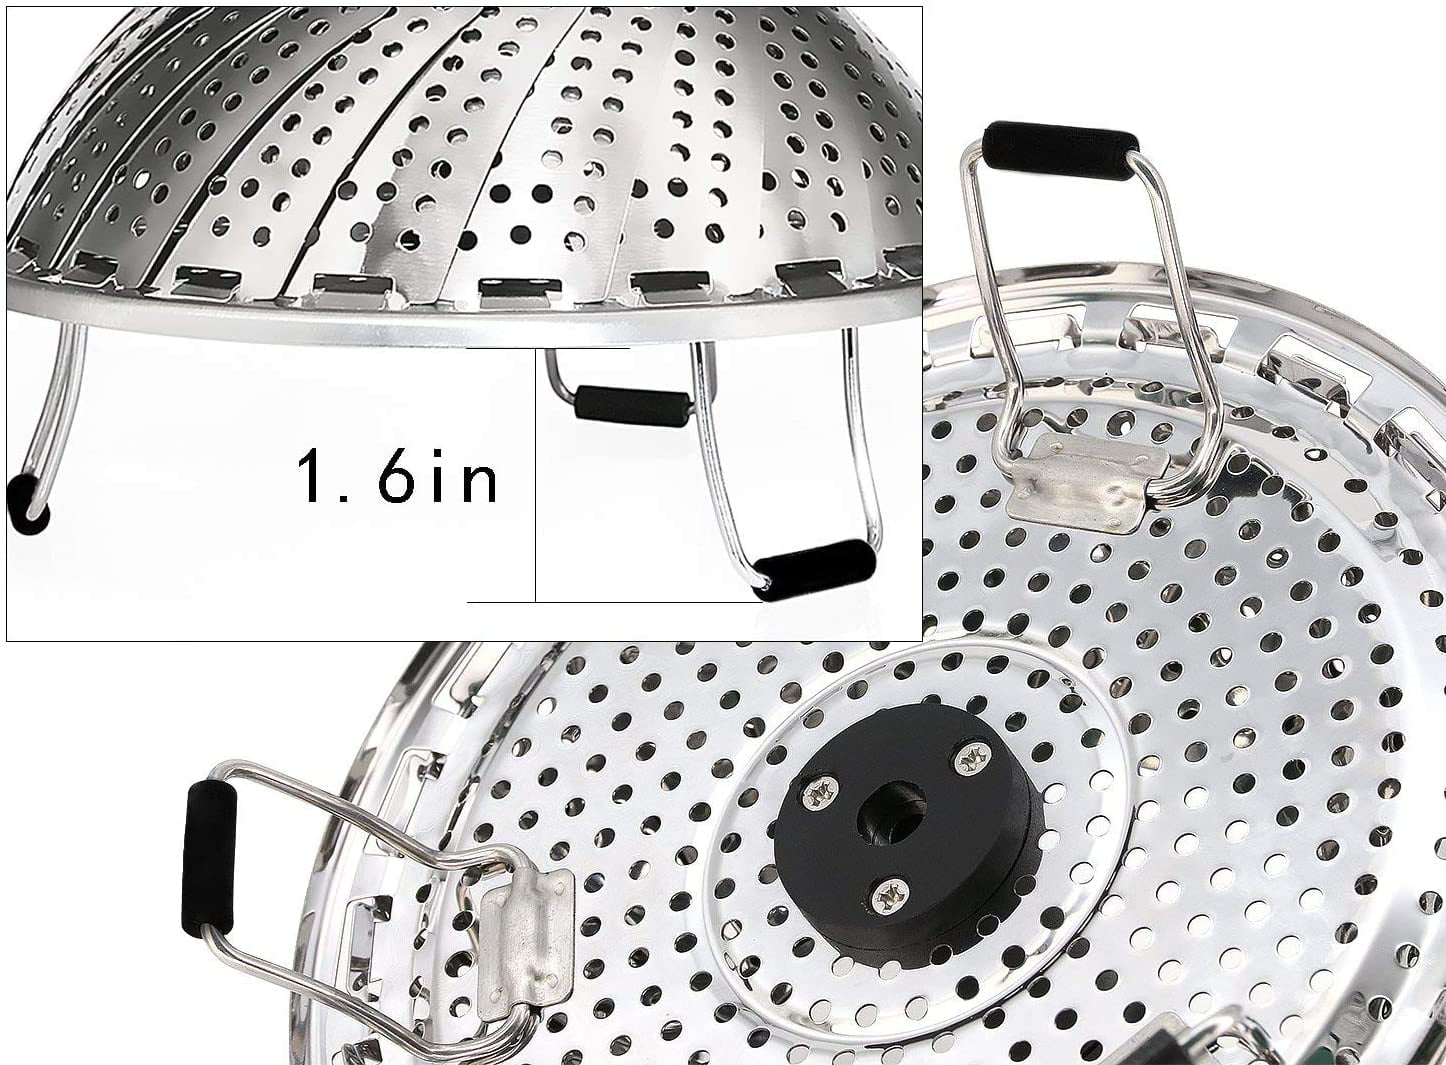 TOPOKO Vegetable Steamer Basket, Fits Instant Pot Pressure Cooker 5/6 qt and 8 qt, 18/8 Stainless Steel, Folding Steamer Insert for Veggie Fish